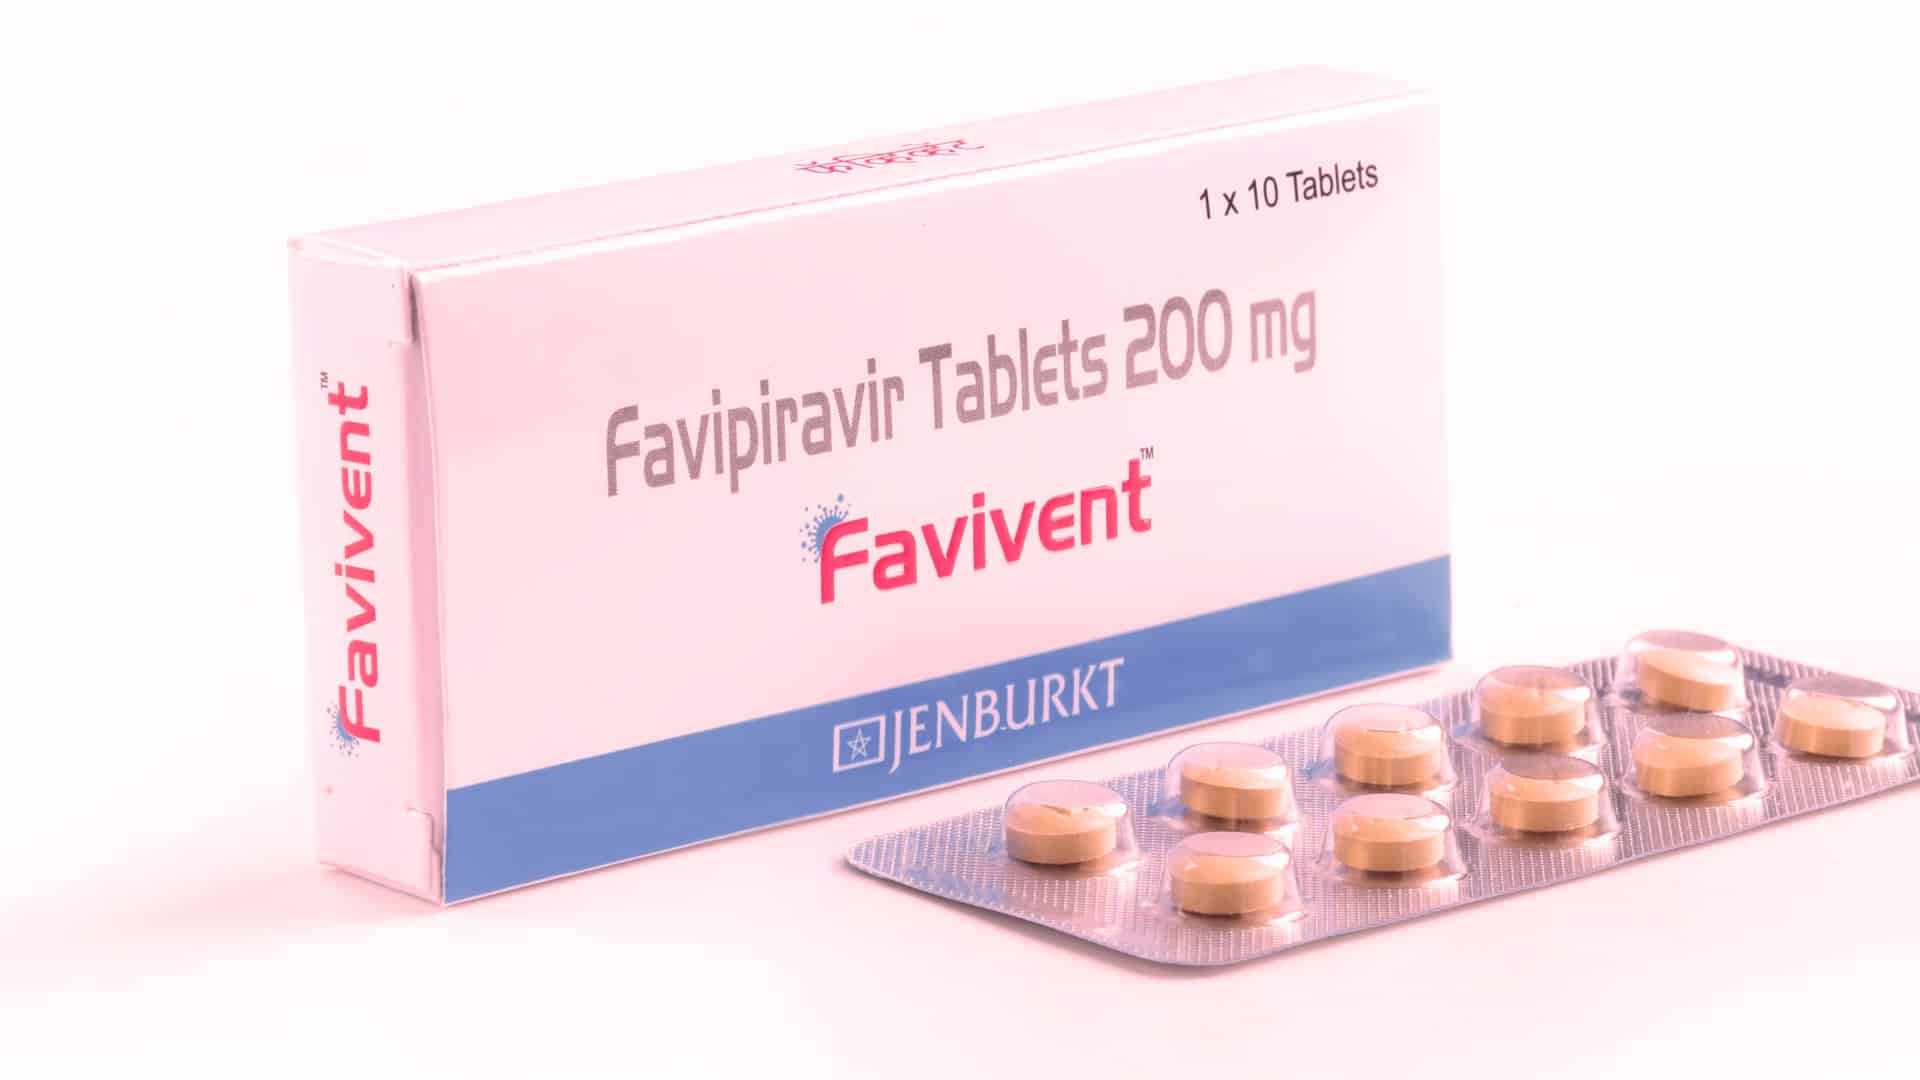 Study shows Favipiravir provides multiple benefits in COVID-19 treatment: Glenmark